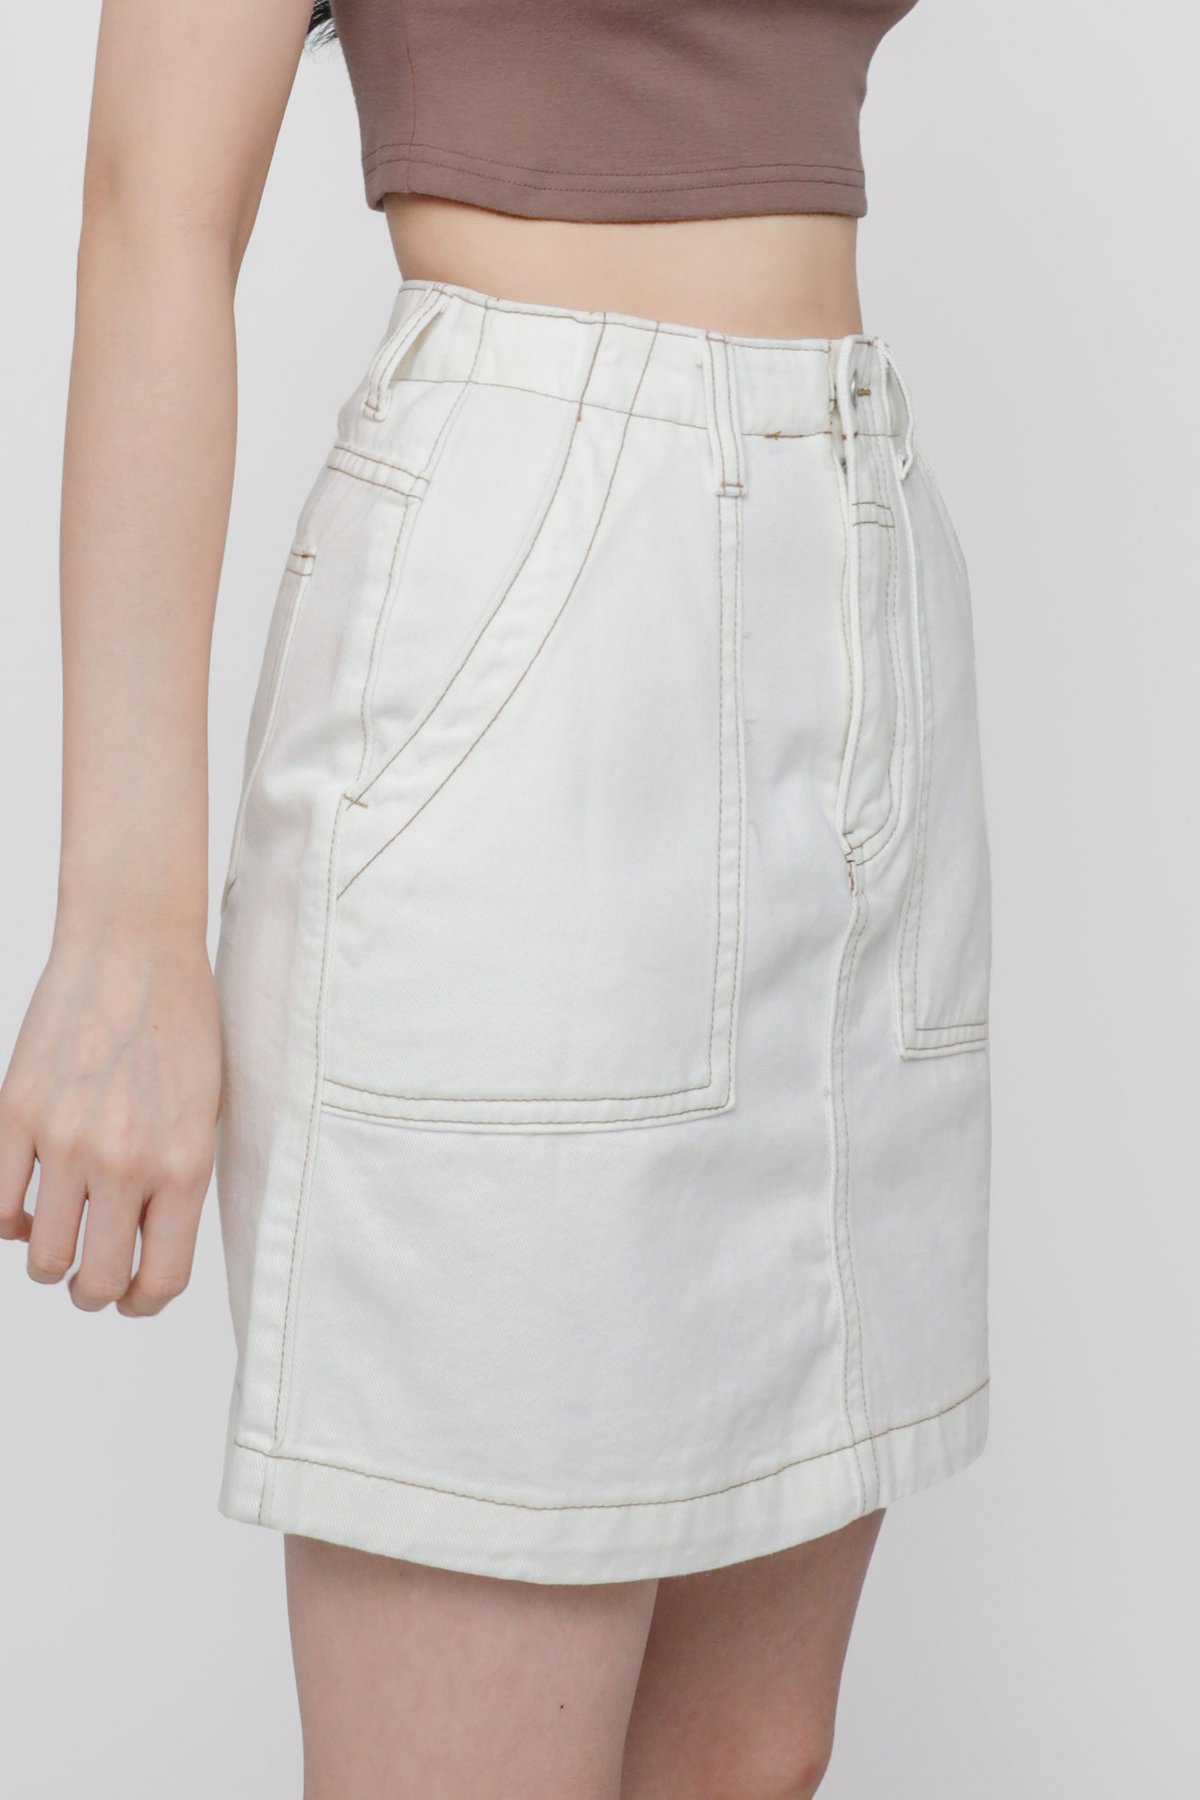 Emmett Contrast Stitching Skirt (White)